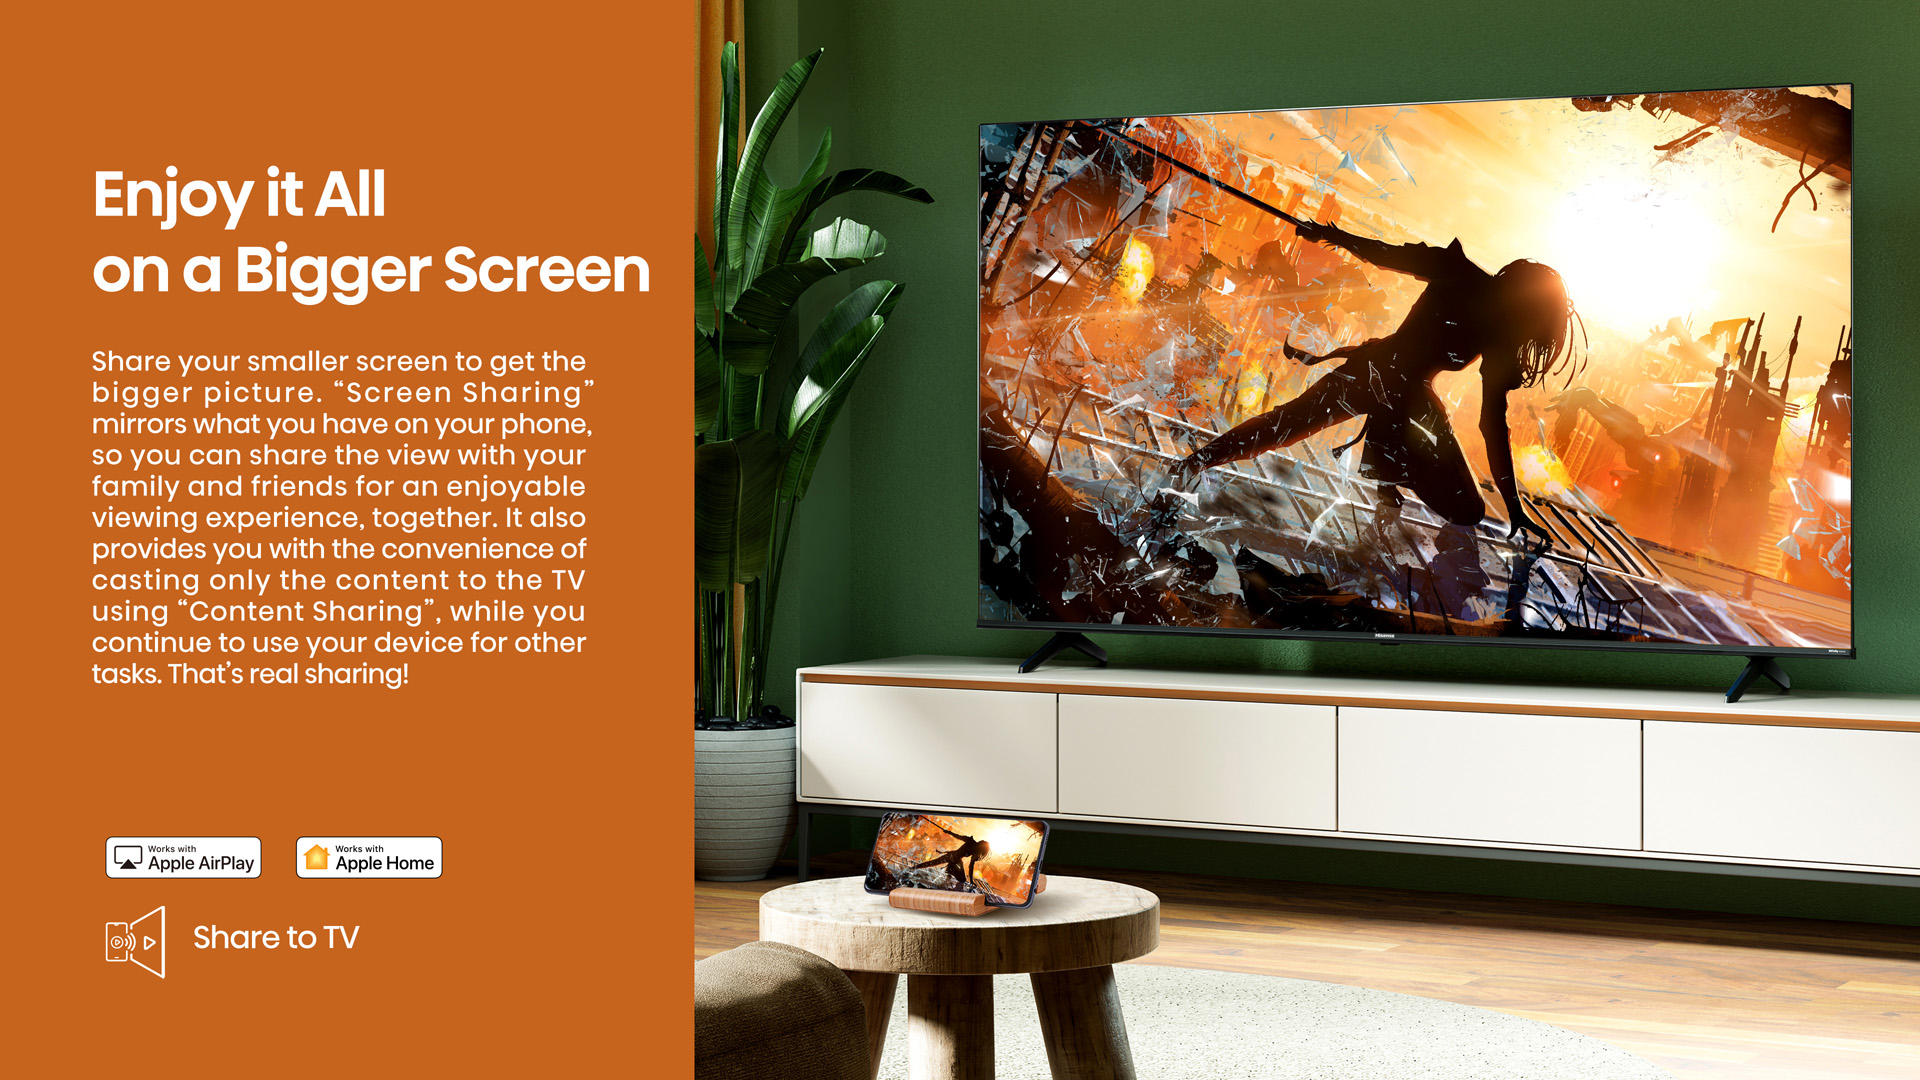 Hisense 65 - Inch 4K Ultra HD VIDAA Smart TV (2023), Airplay 2, AI 4K Upscaler, Dolby Vision, With In-Built Free To Air Decoder, Bluetooth, HDMI, Chromecast, USB, Netflix, Youtube - Black